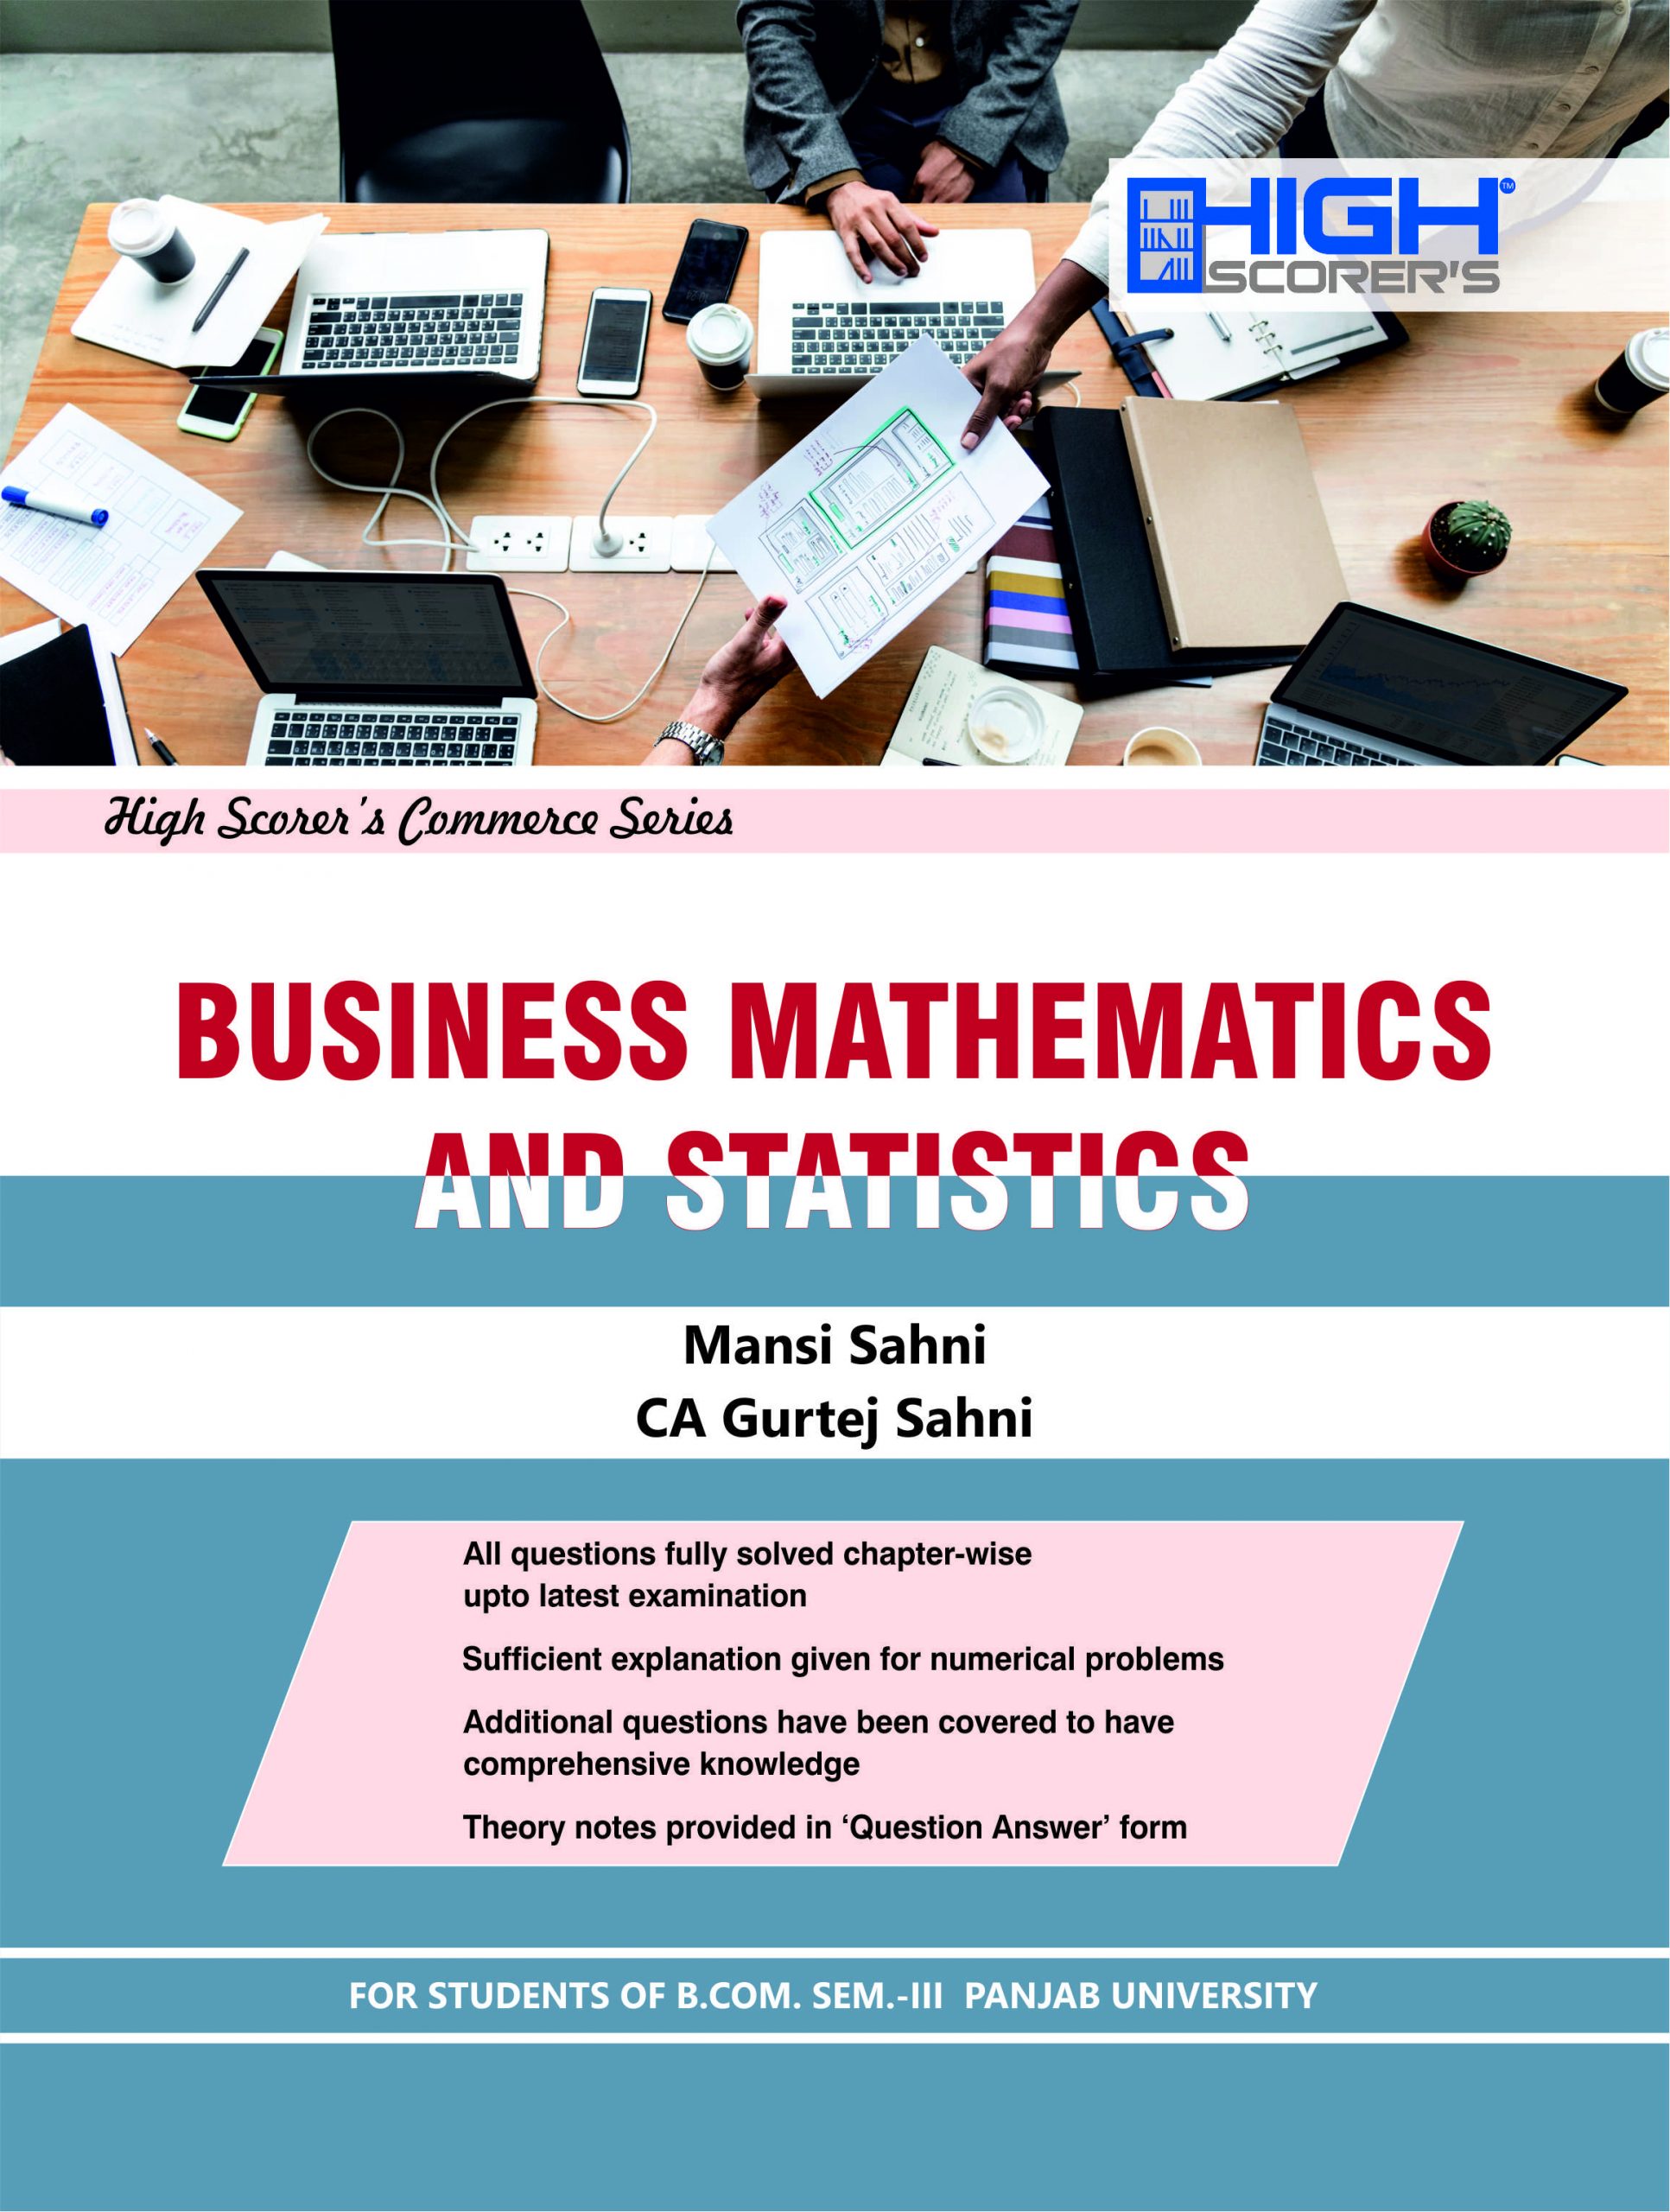 High Scorer’s Business Mathematics & Statistics for B.Com Semester-III by Mansi Sahni & CA Gurtej Sahni (Mohindra Publishing House Edition 2022 for Panjab University